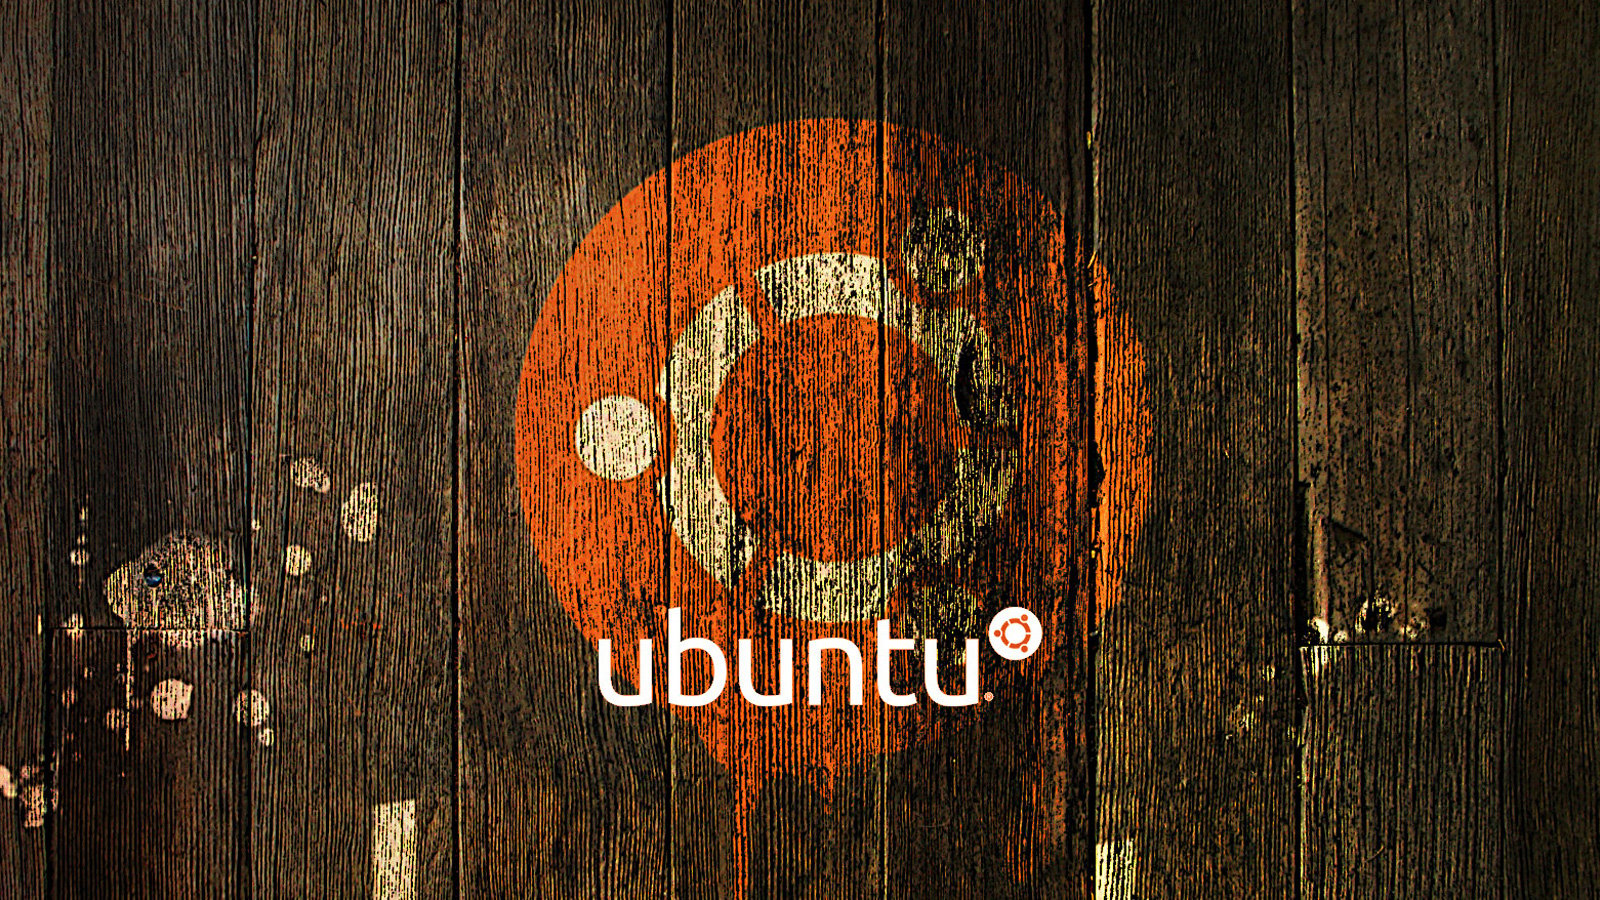 Ubuntu 6348-1: Linux kernel vulnerabilities